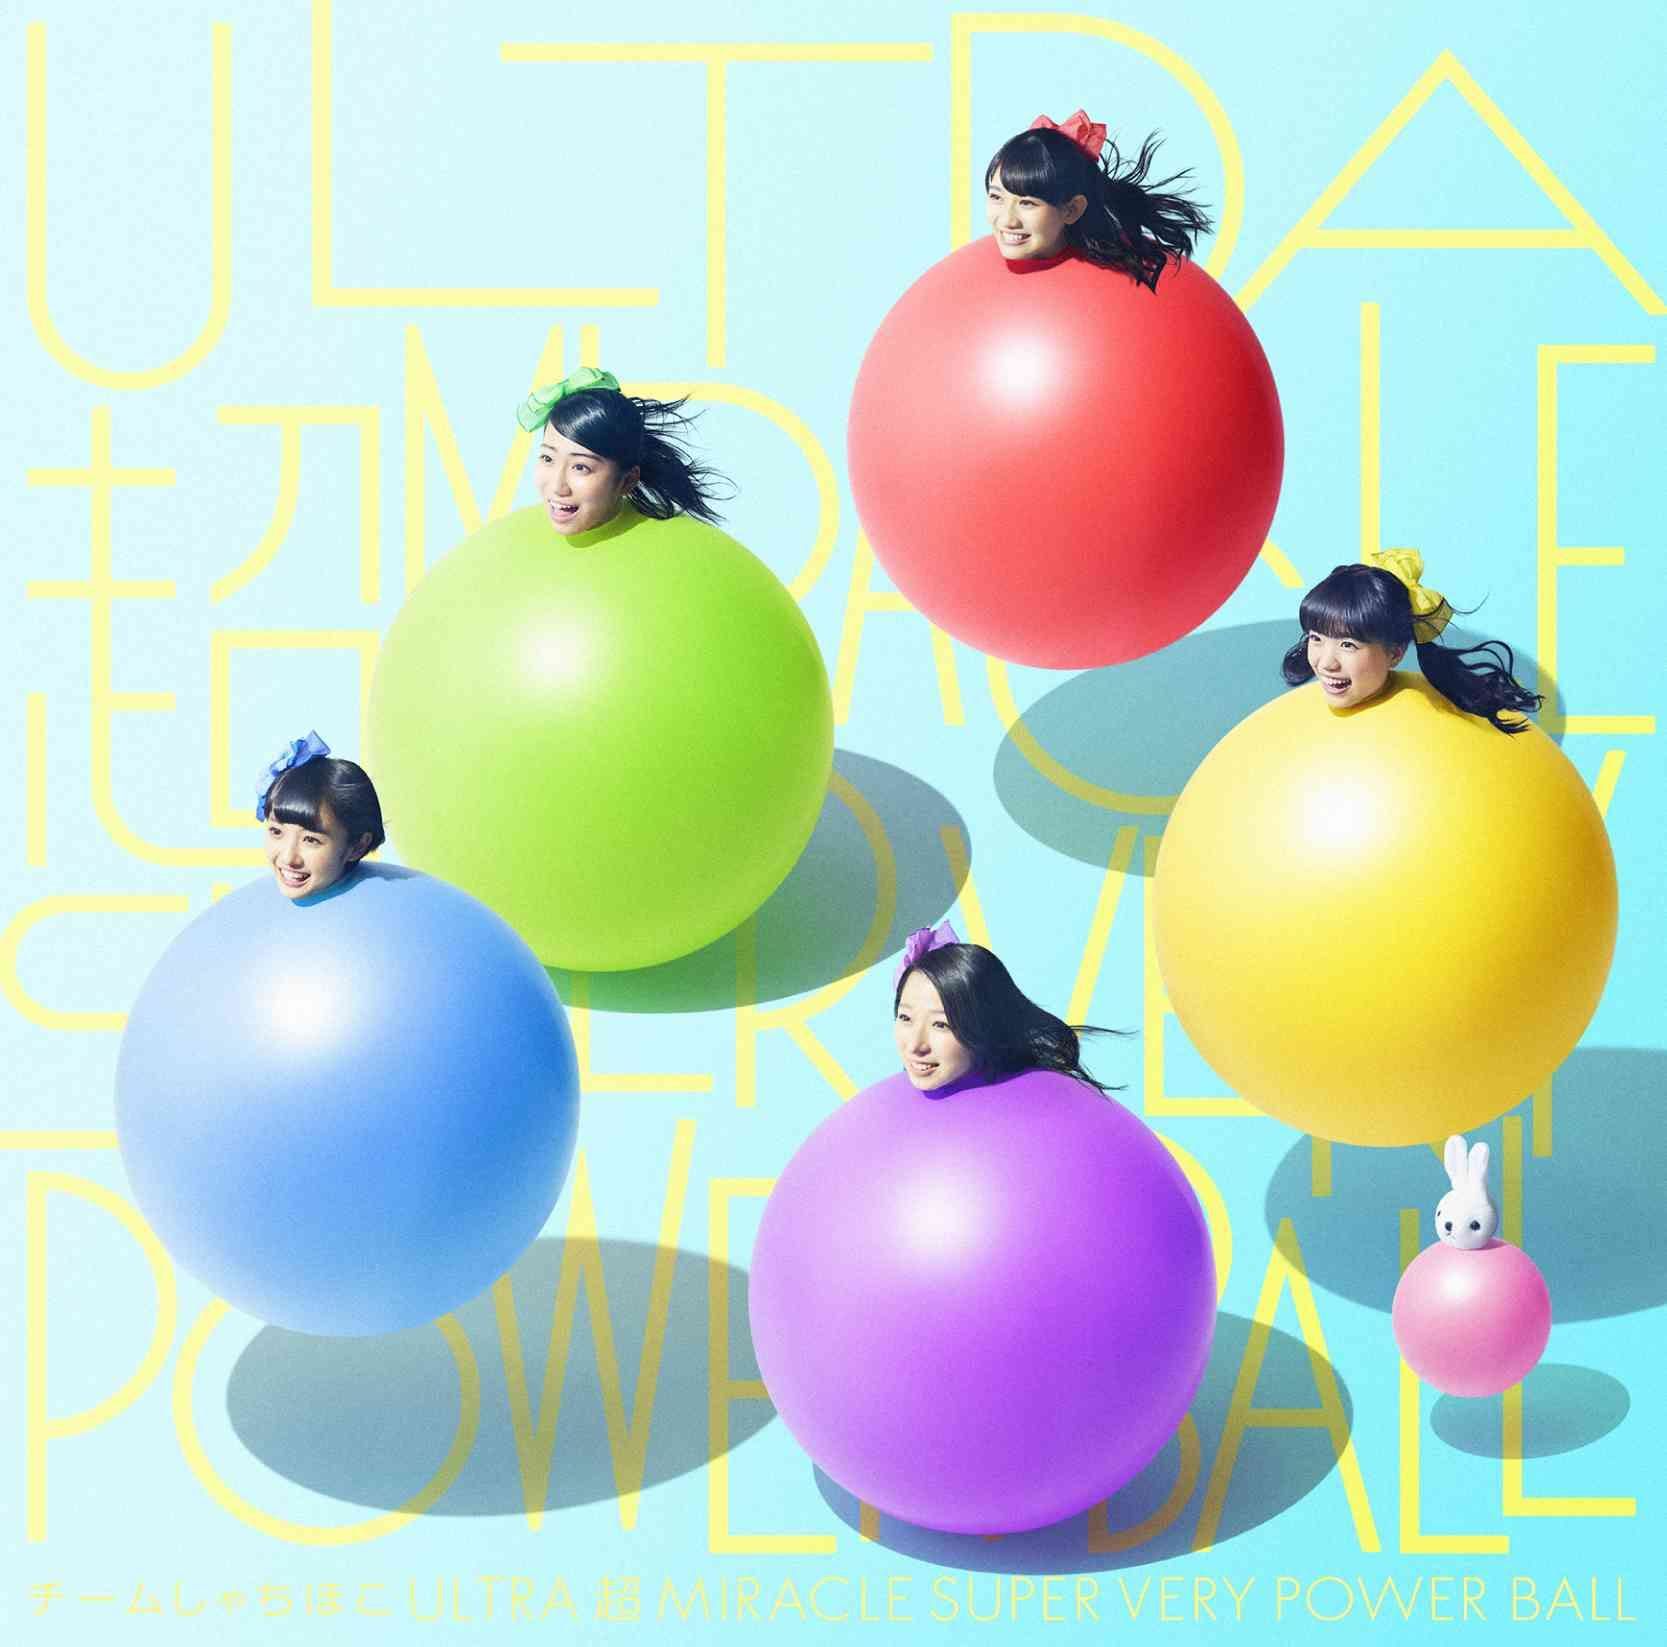 「ULTRA 超 MIRACLE SUPER VERY POWER BALL」初回限定盤Dジャケット